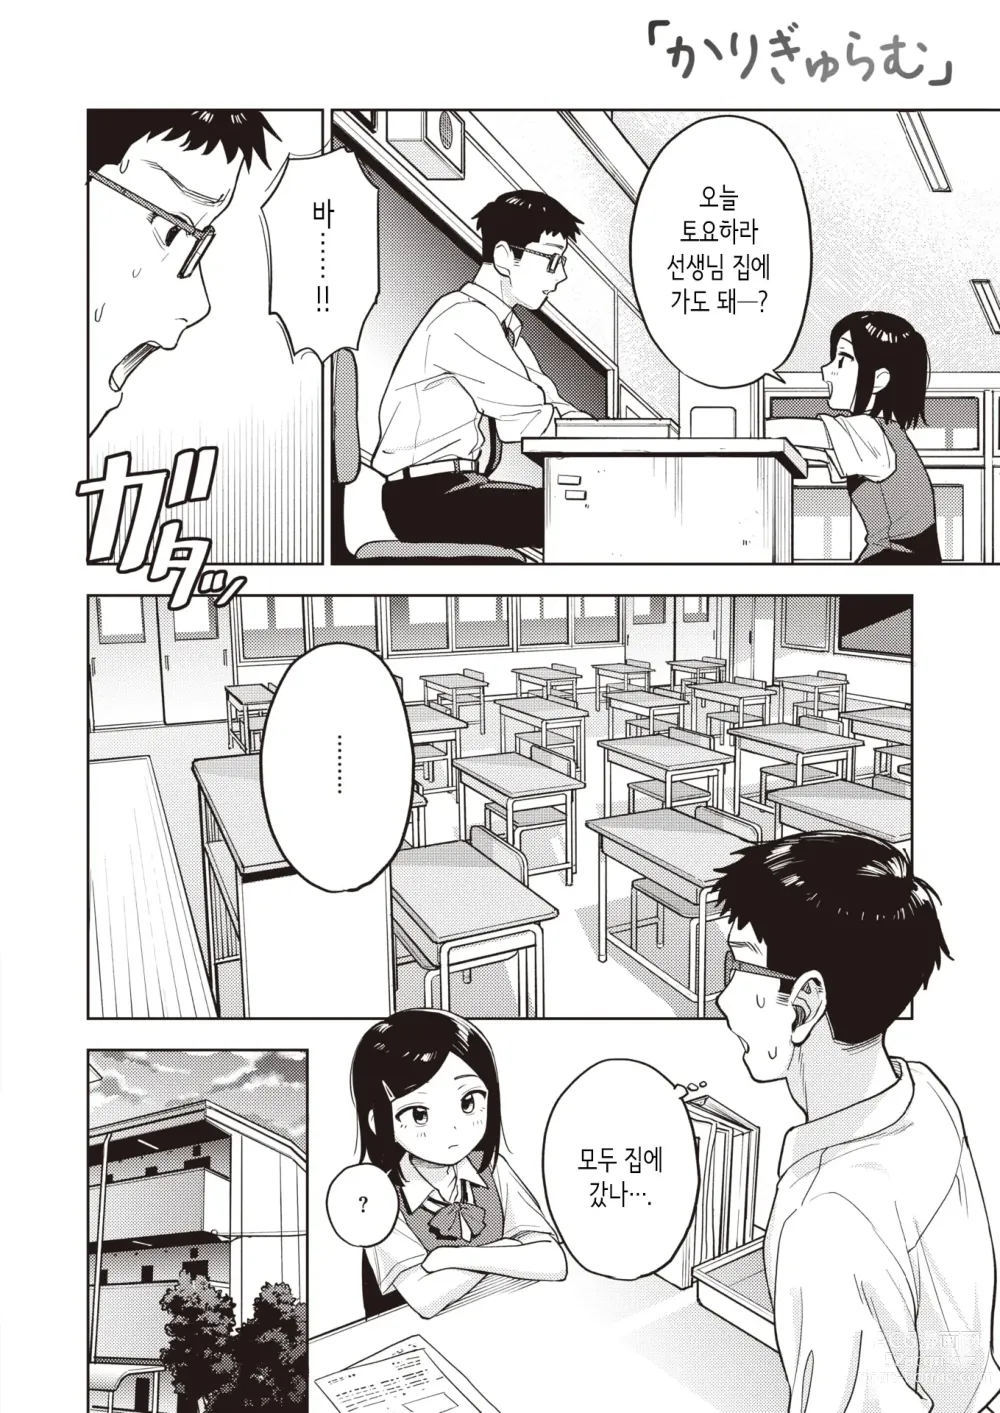 Page 5 of manga Curriculum